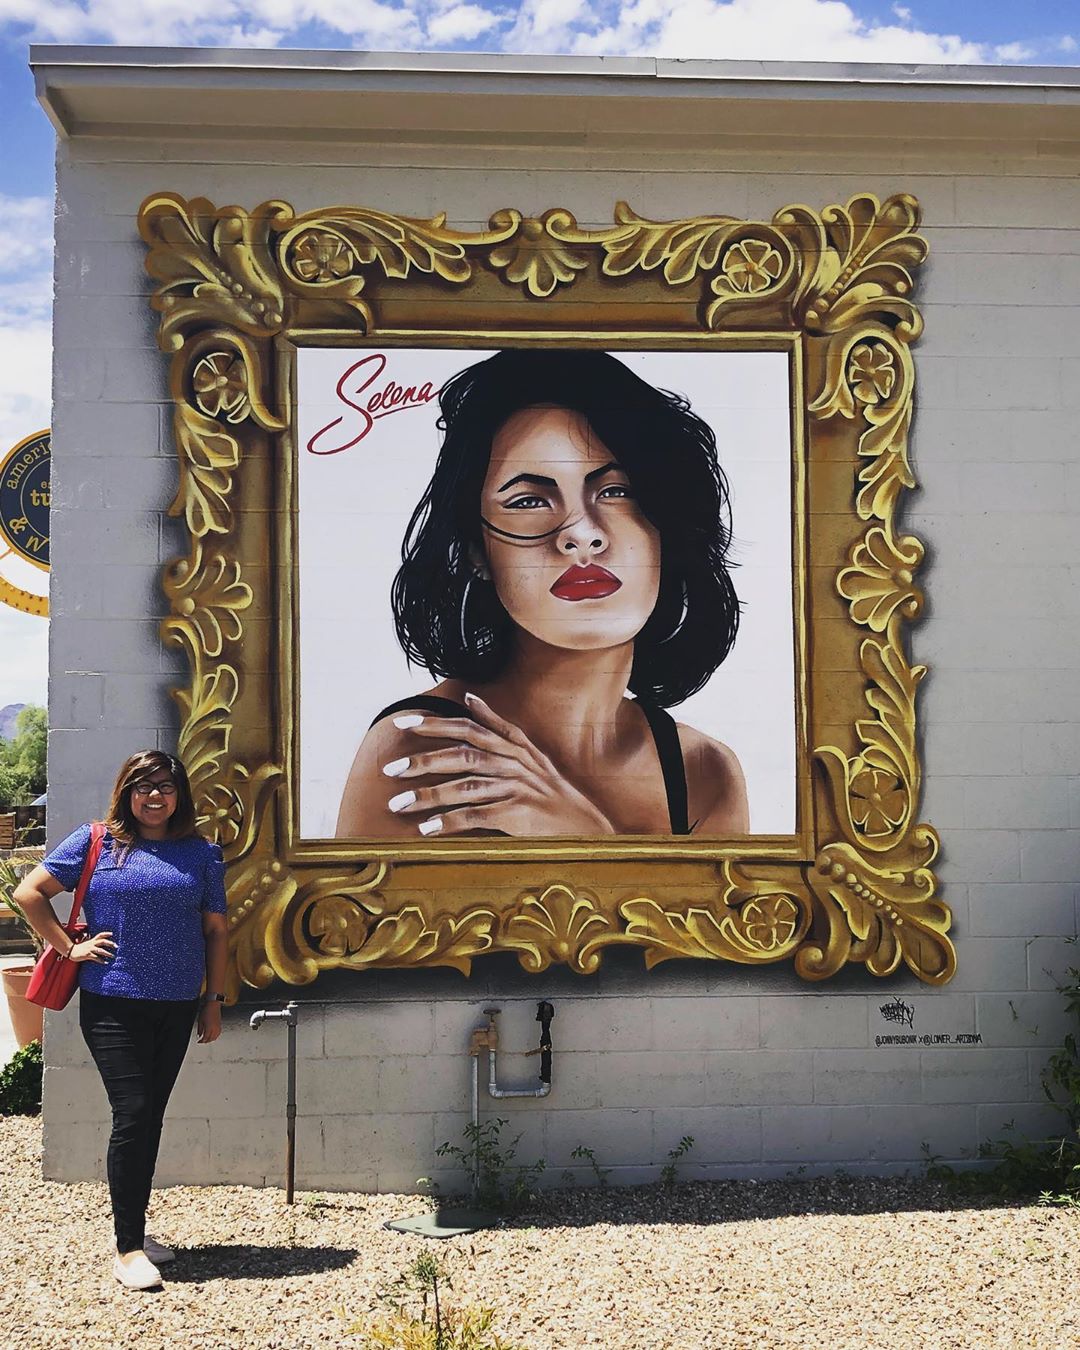 Selena Tribute murals in downtown Tucson